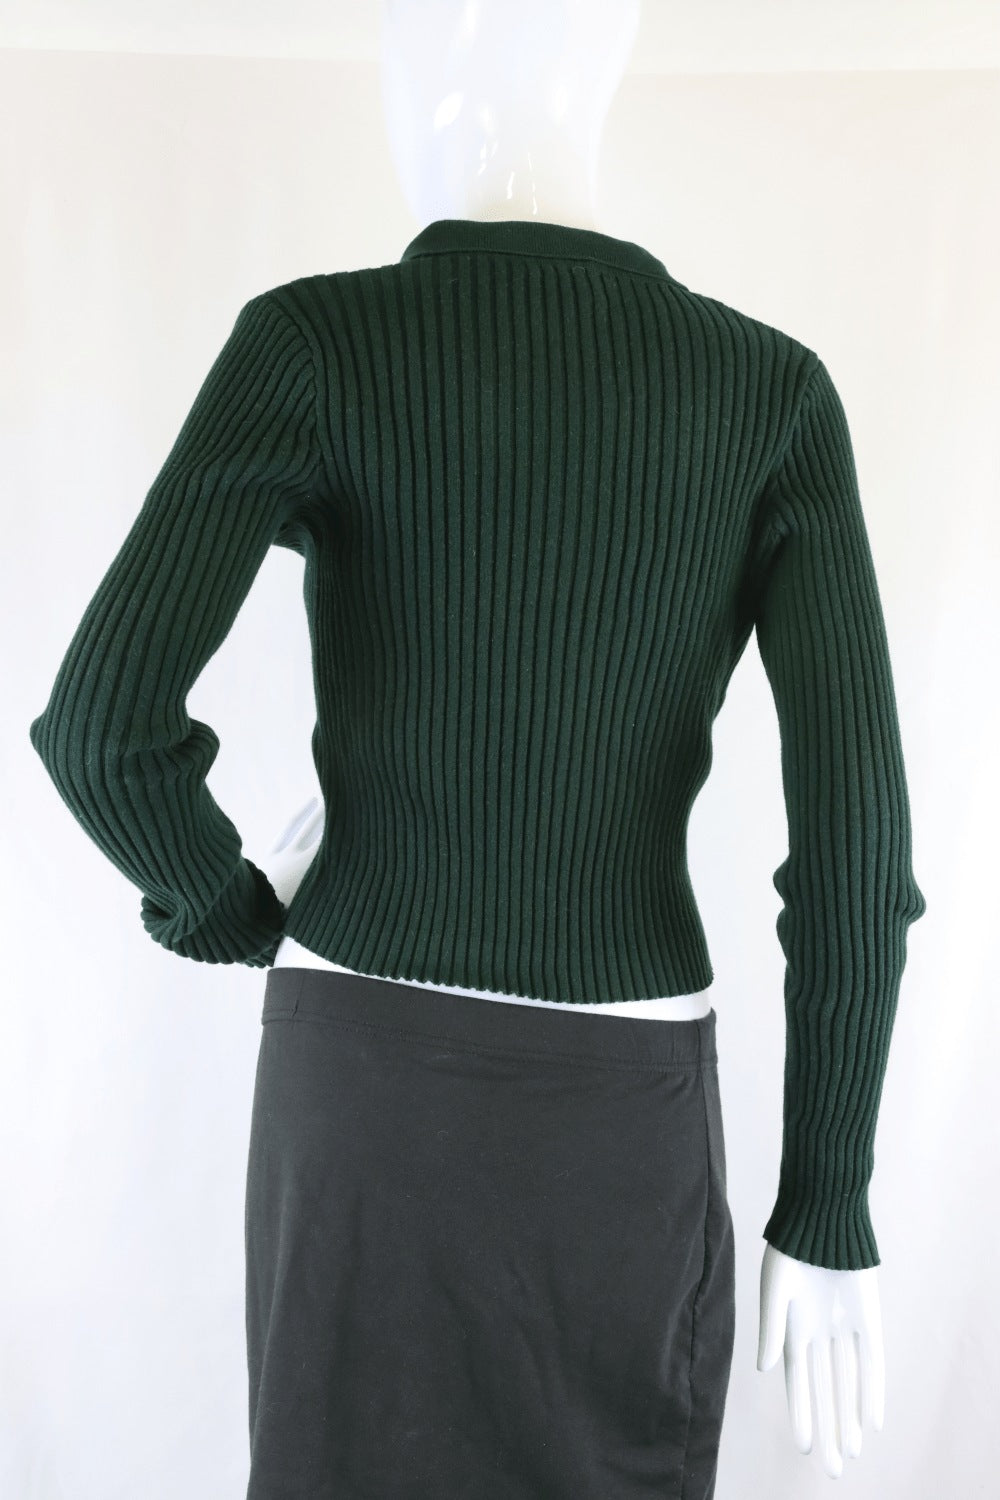 Brandy Melville Green Knit Top S